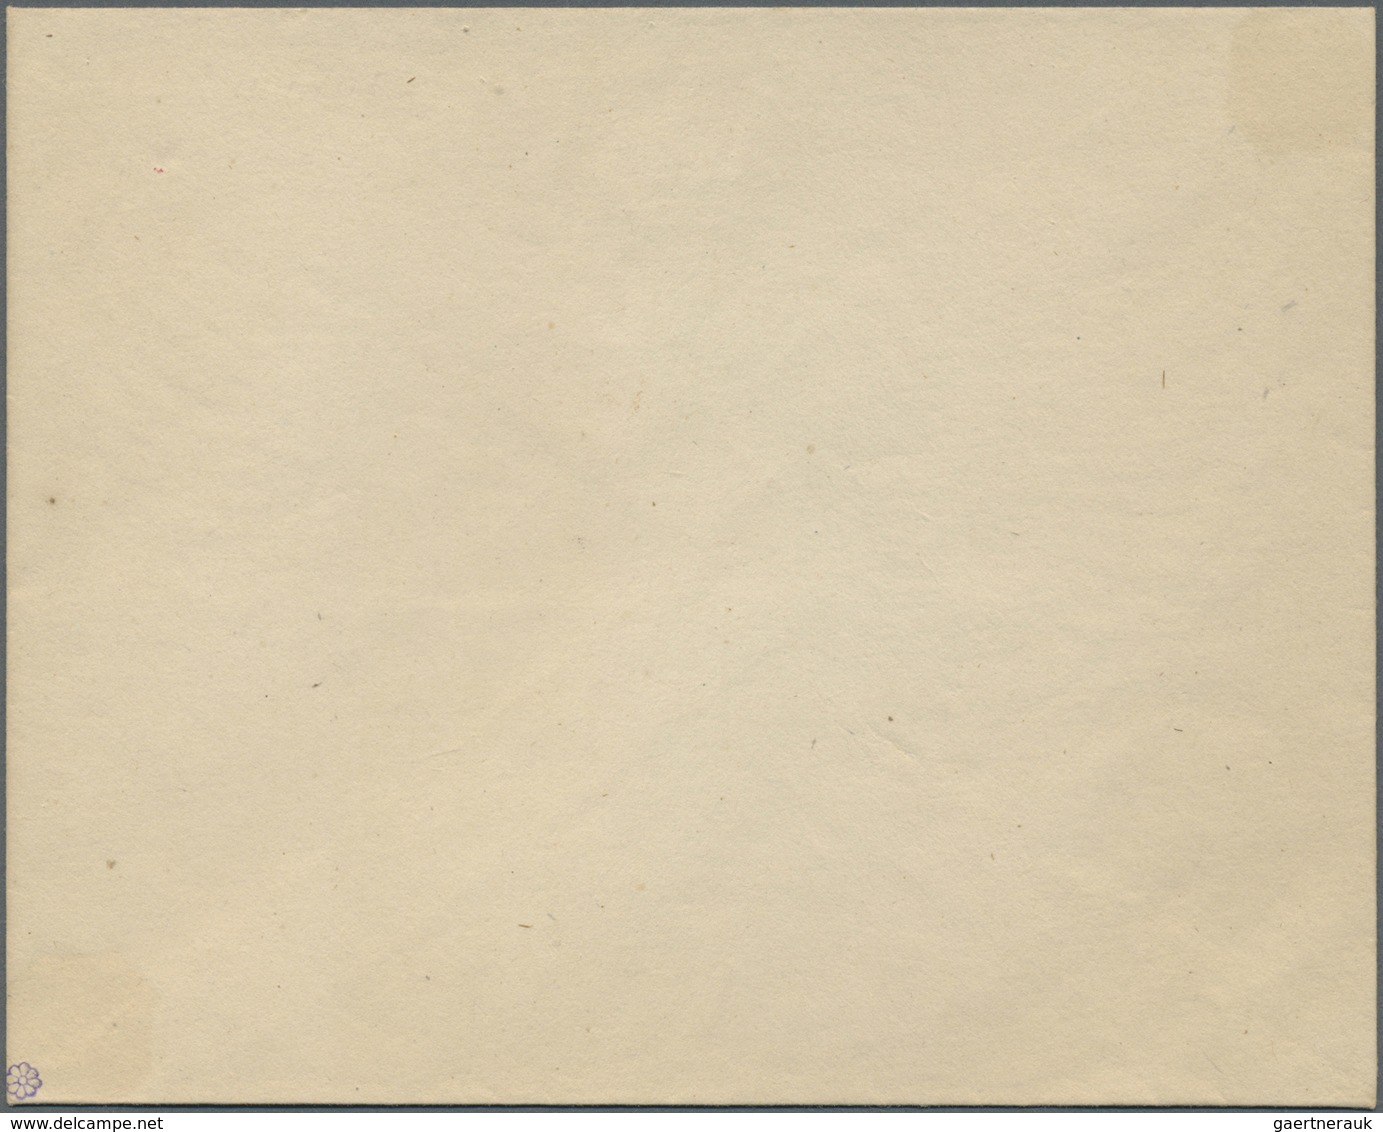 GA Russland - Ganzsachen: 1848, First Issue 30 + 1 K. Carmine Envelope, Unused, Slight Toned, Otherwise - Interi Postali